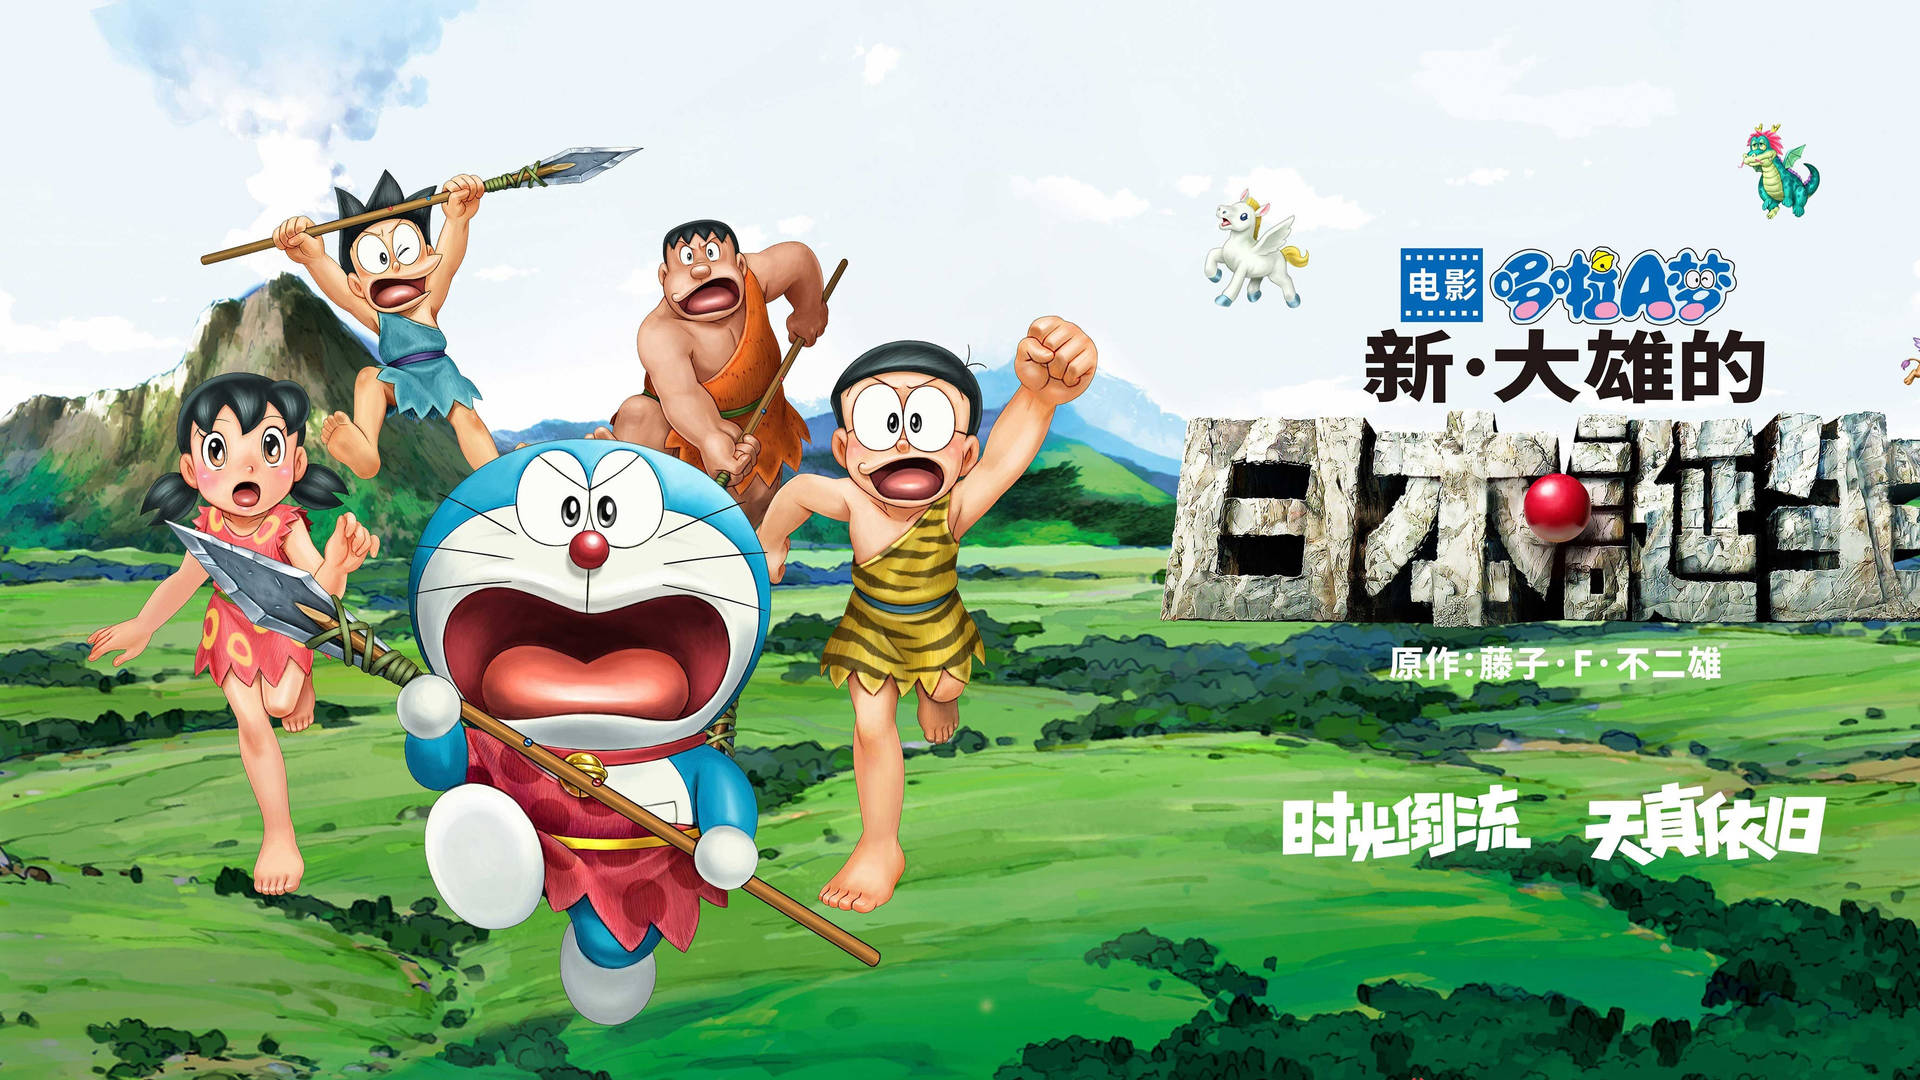 3840X2160 Doraemon Wallpaper and Background